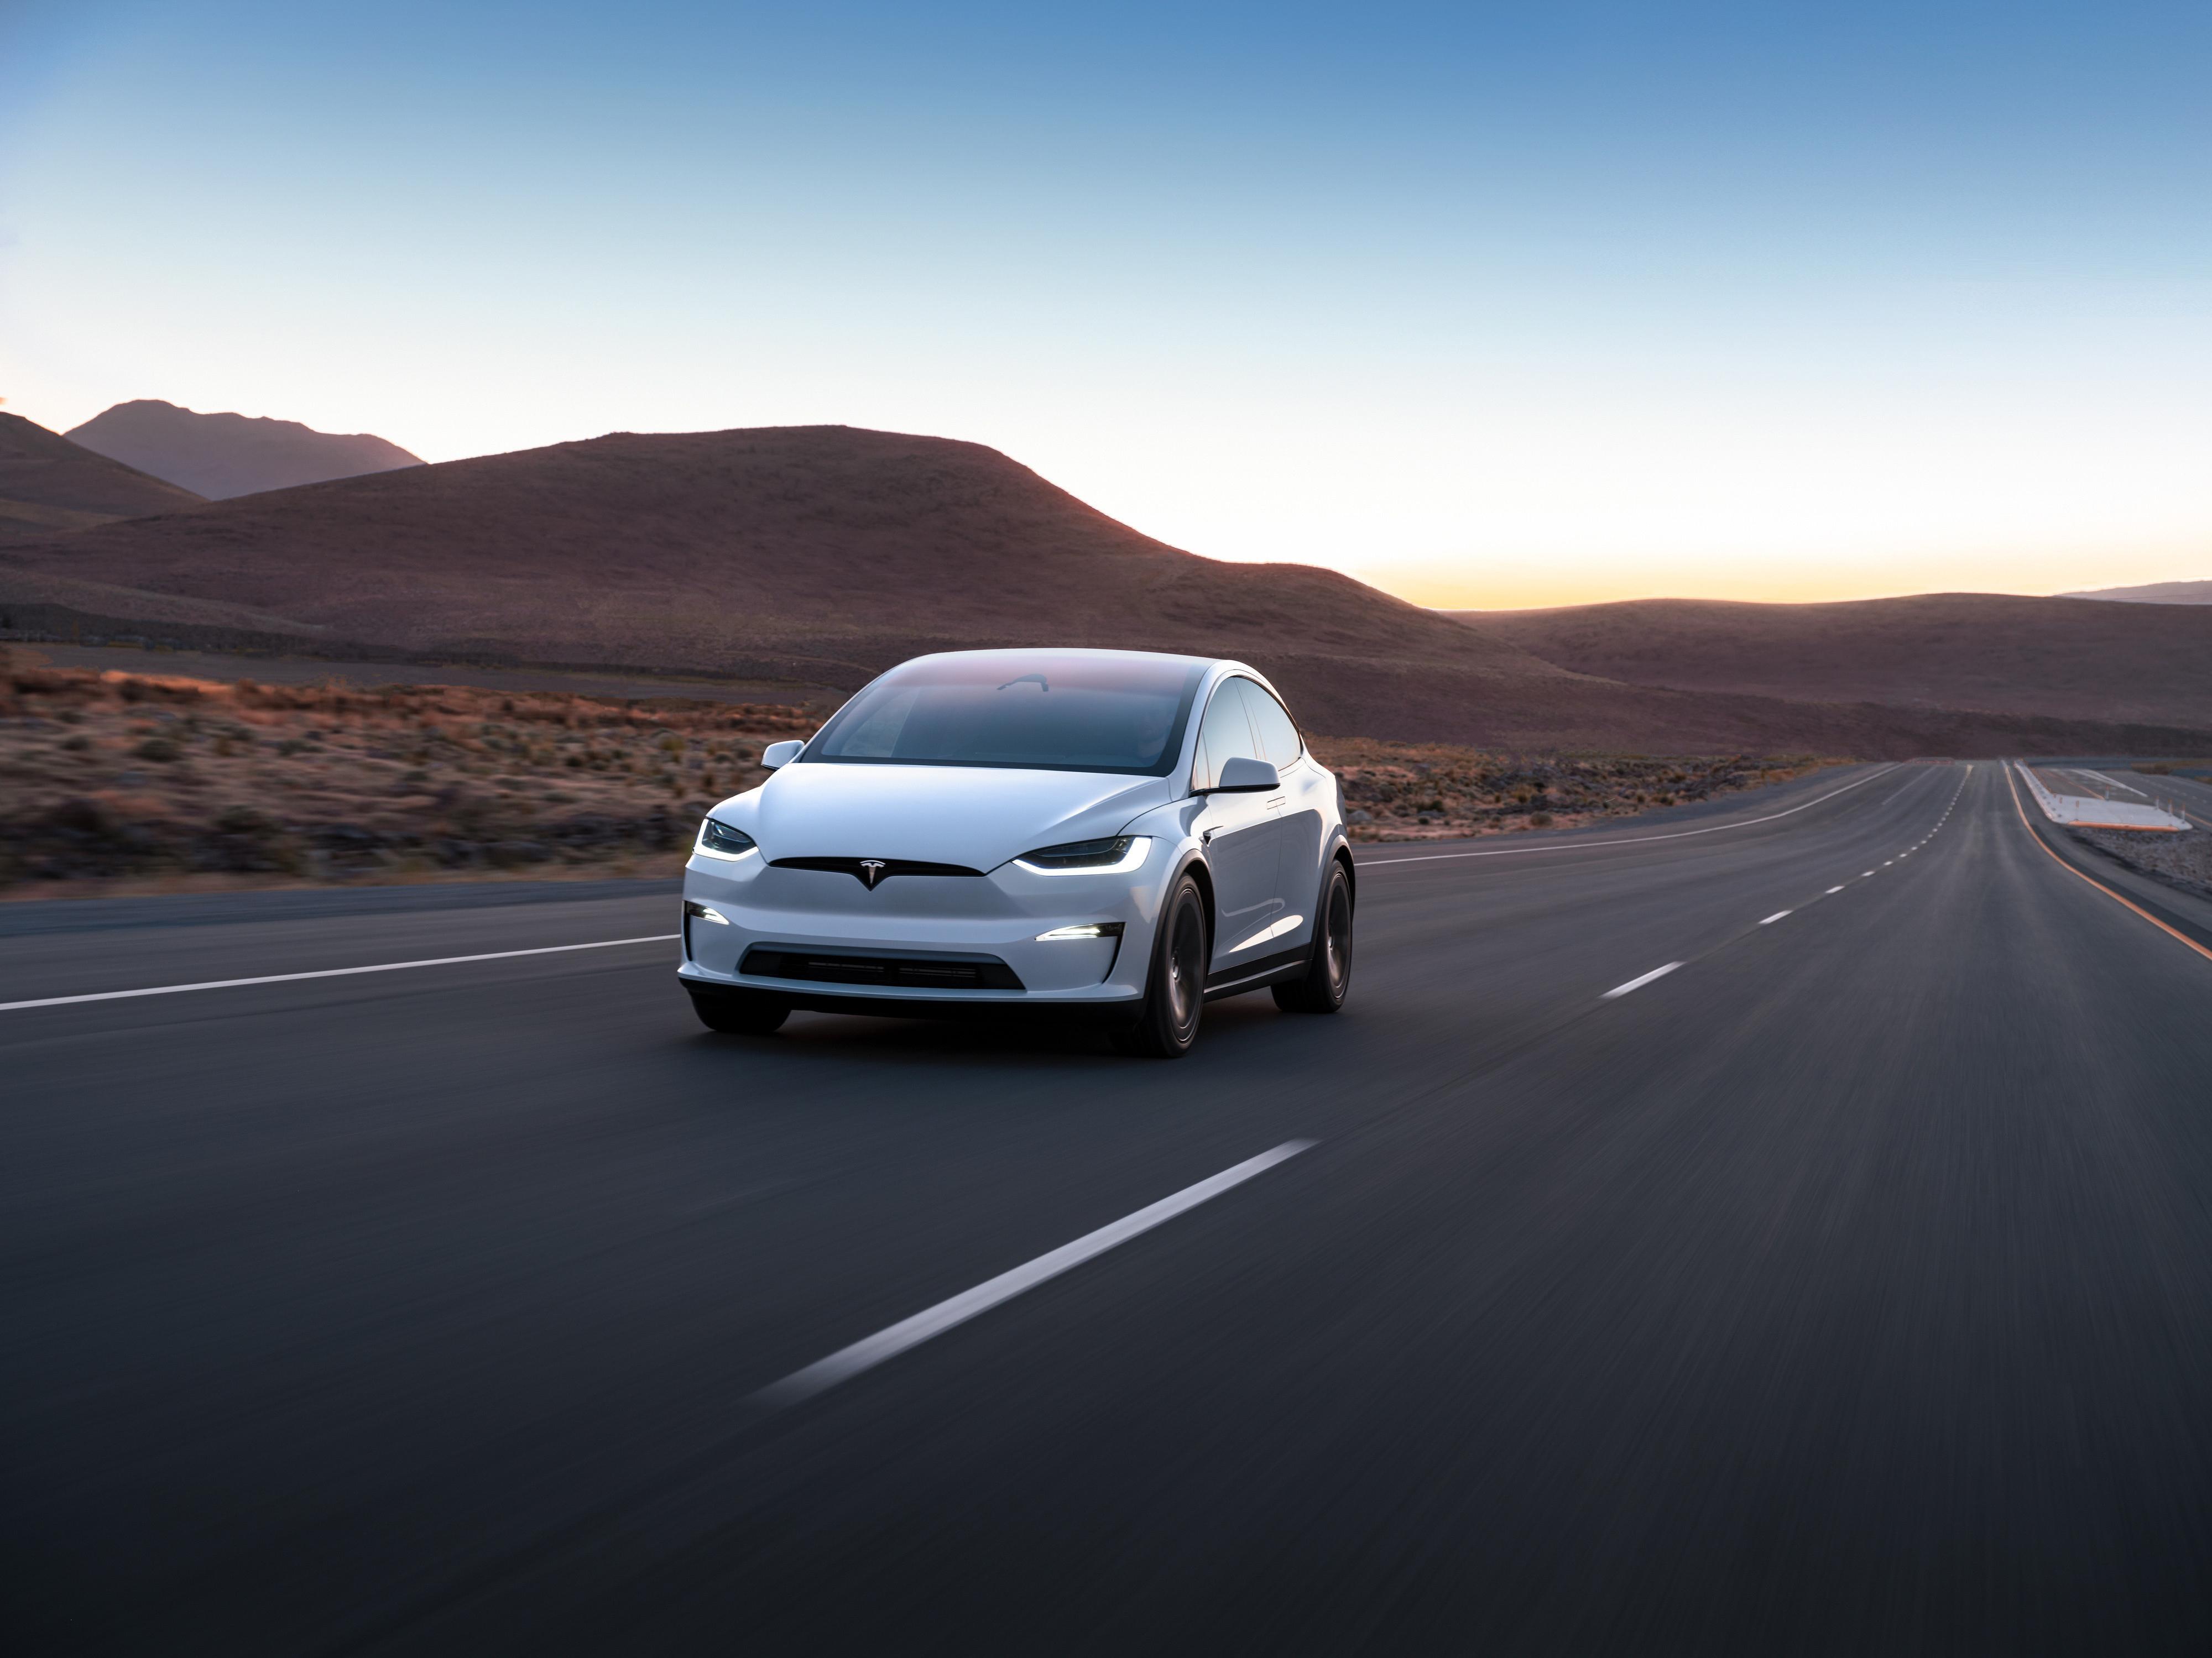 Tesla Recalls More Than Million Vehicles Over Autopilot Safety